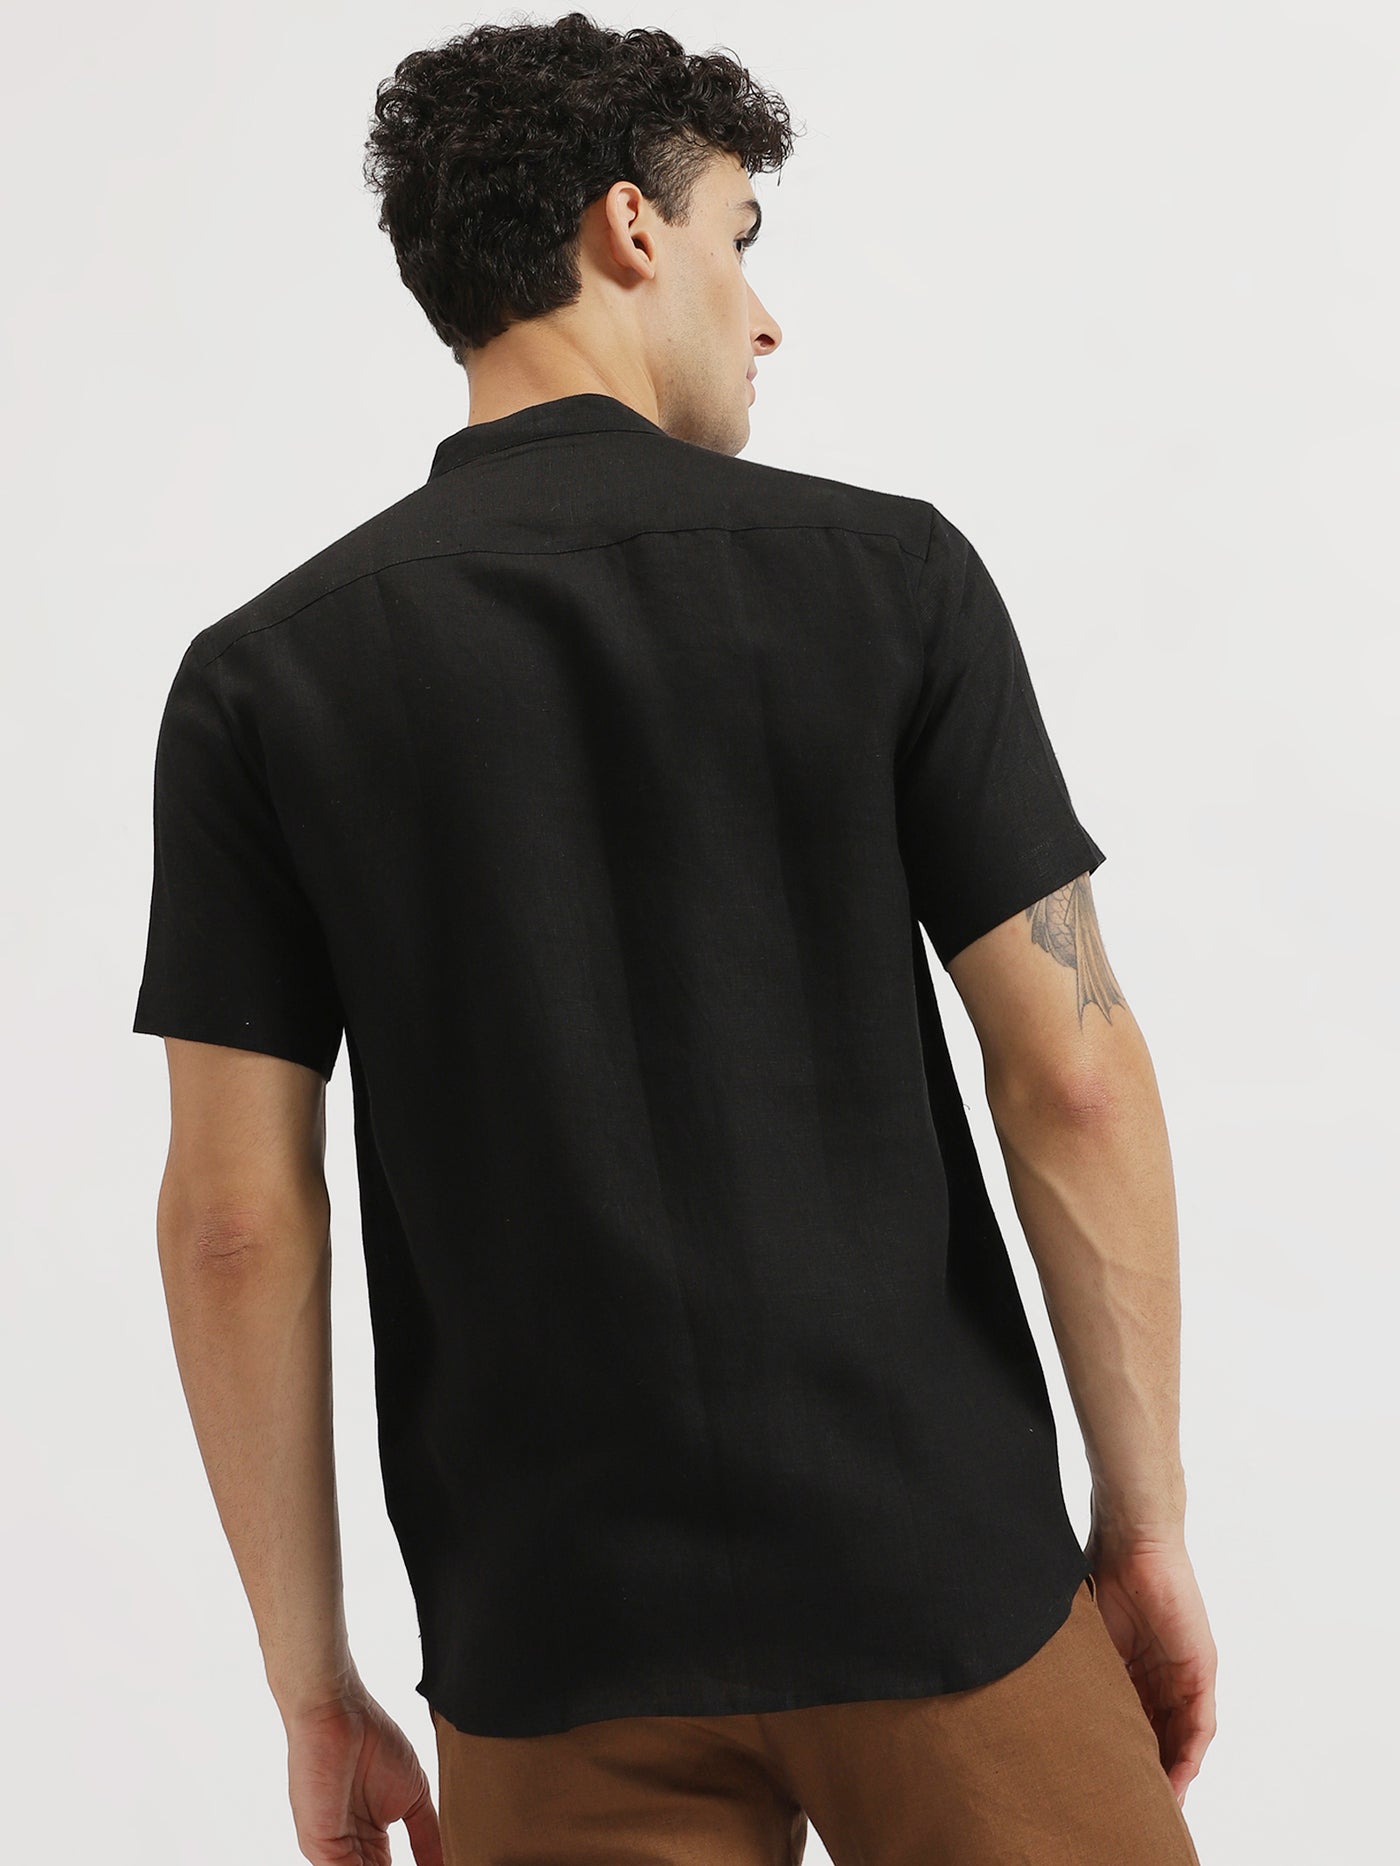 Ronan - Pure Linen Mandarin Collar Half Sleeve Shirt - Black